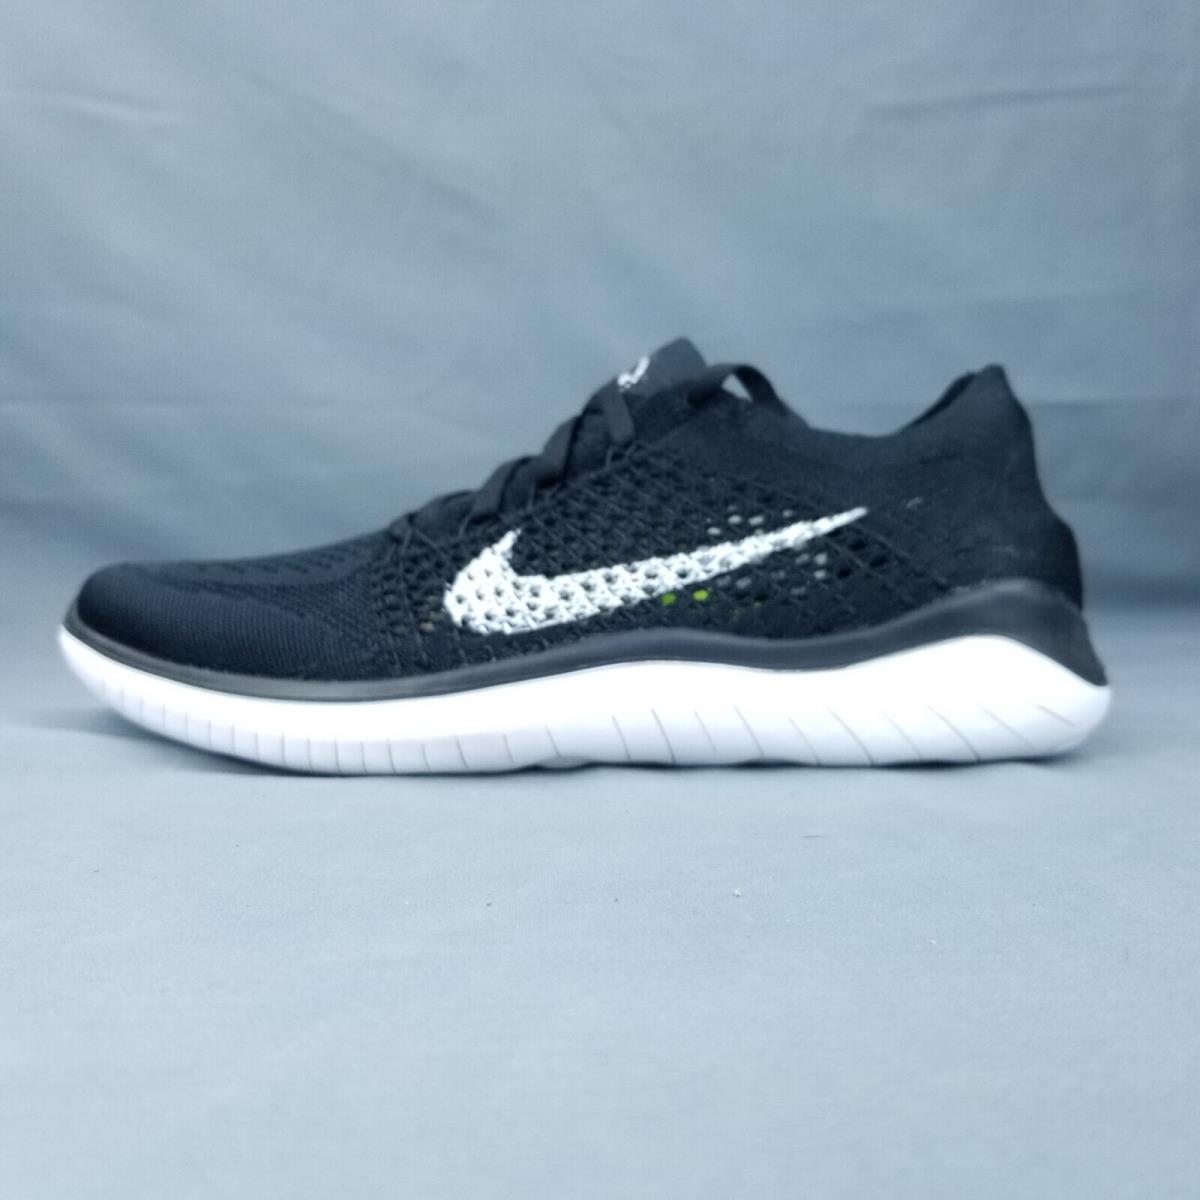 Nike Free RN Flyknit Women`s Running Shoes Black White 942839 001 Sizes 7-9